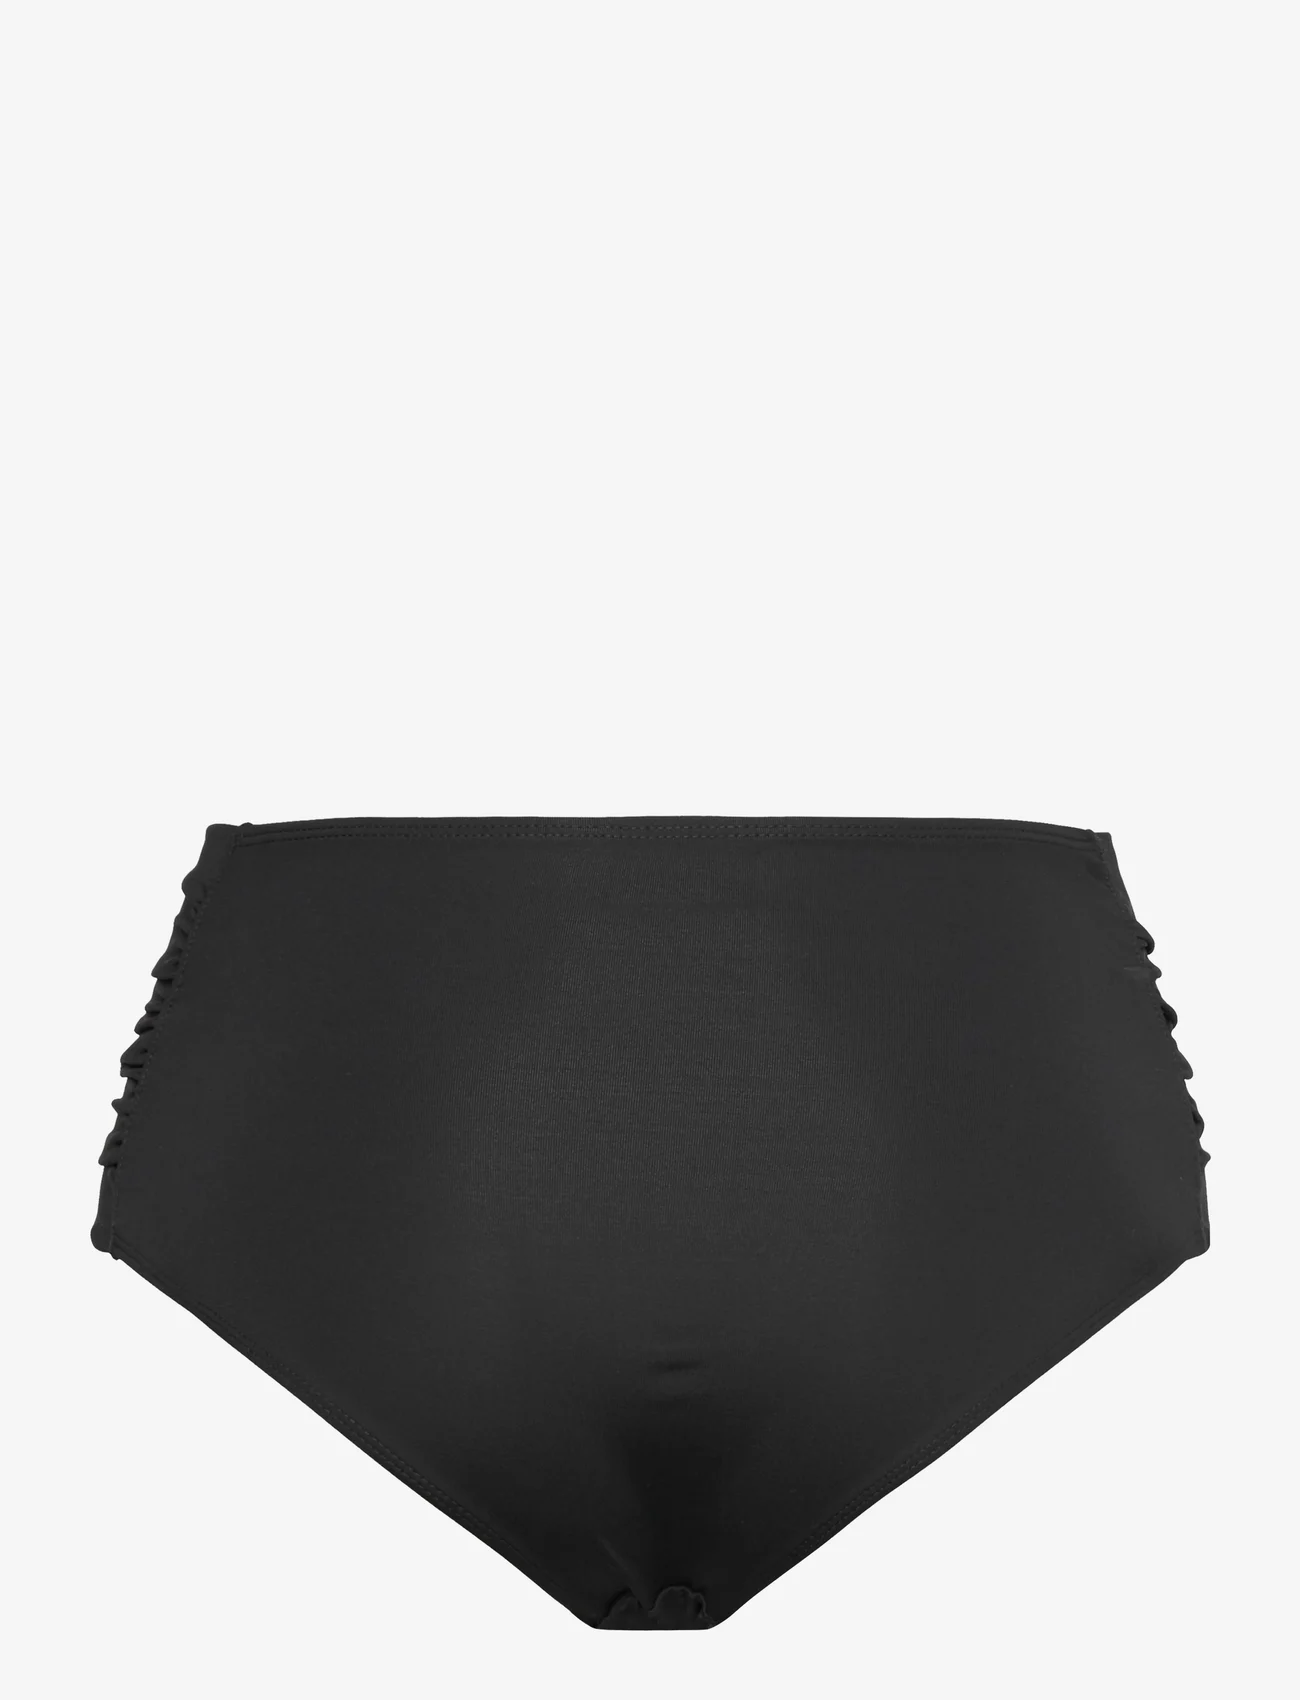 Panos Emporio - Olympia Solid Btm - bikini truser - black - 1